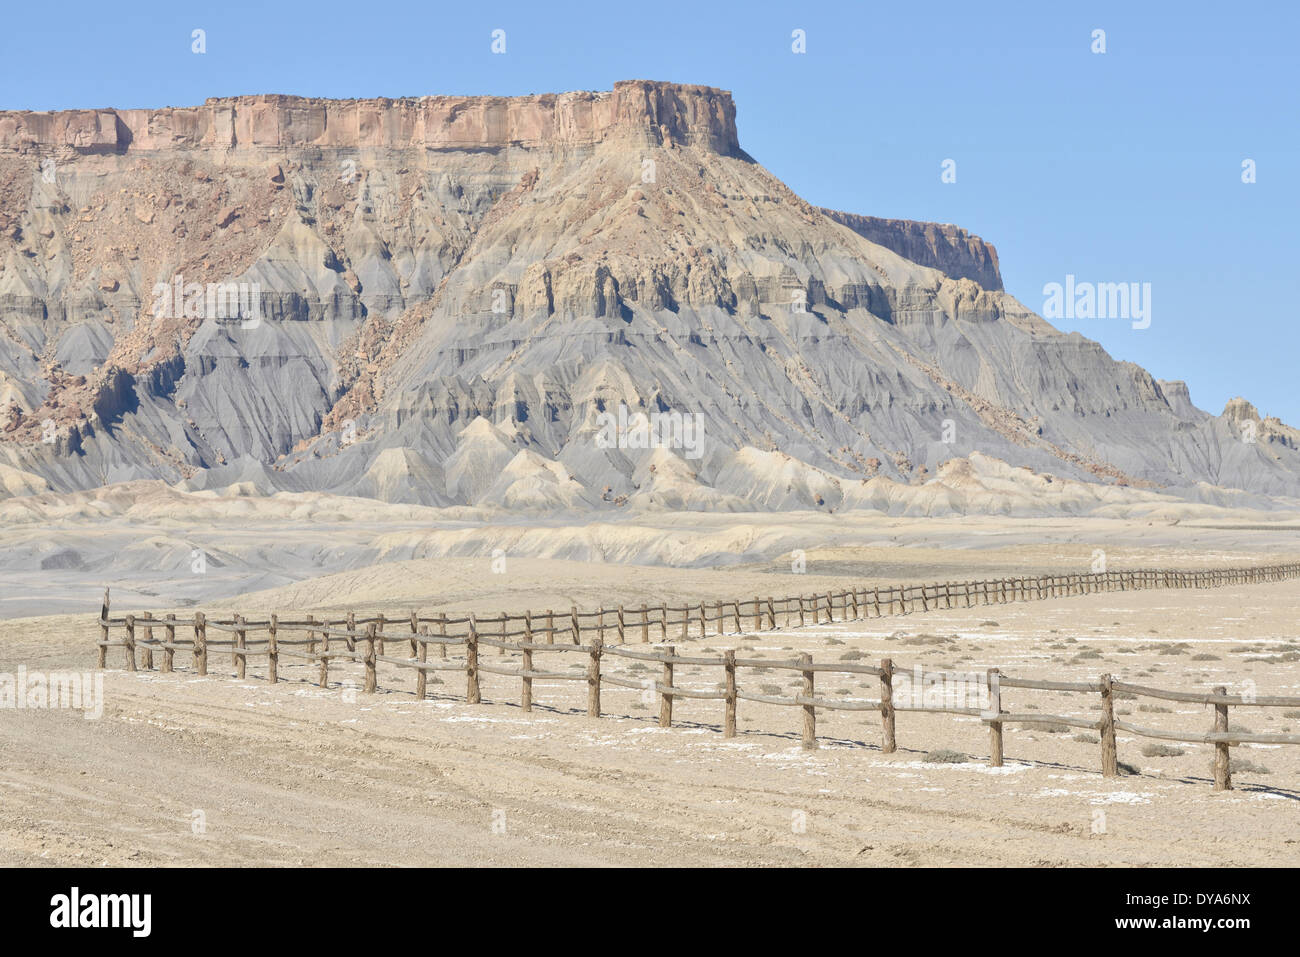 USA America United States Utah Colorado Plateau southern Factory Butte desert OTV area barren land rocks fence outback Stock Photo